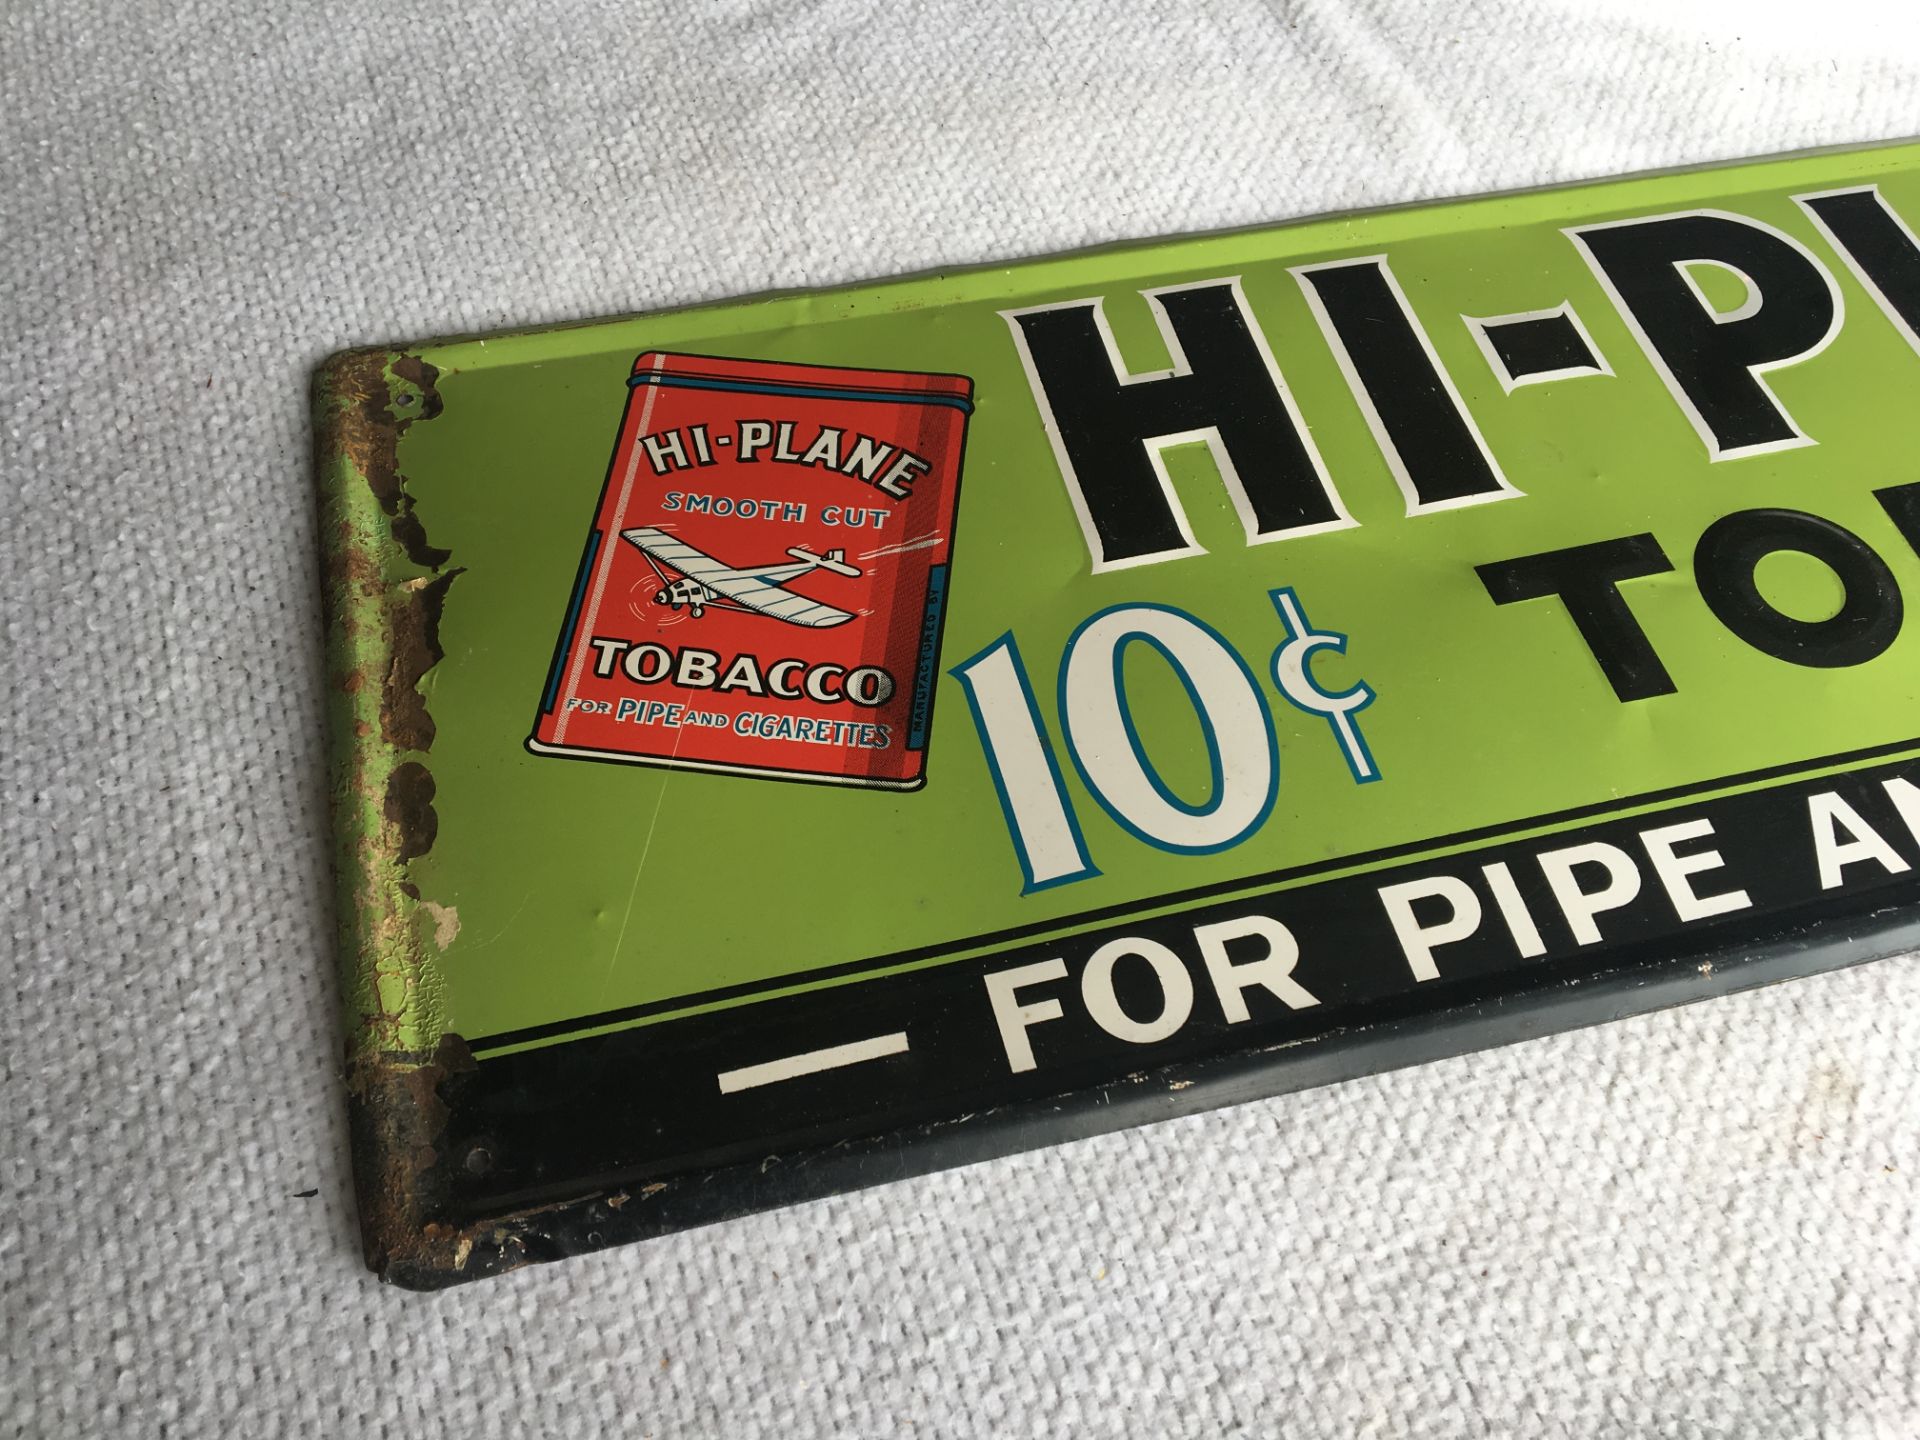 Hi-Plane Tobacco sign, 11 ¾” x 35 ¼”, metal sign - Image 2 of 2